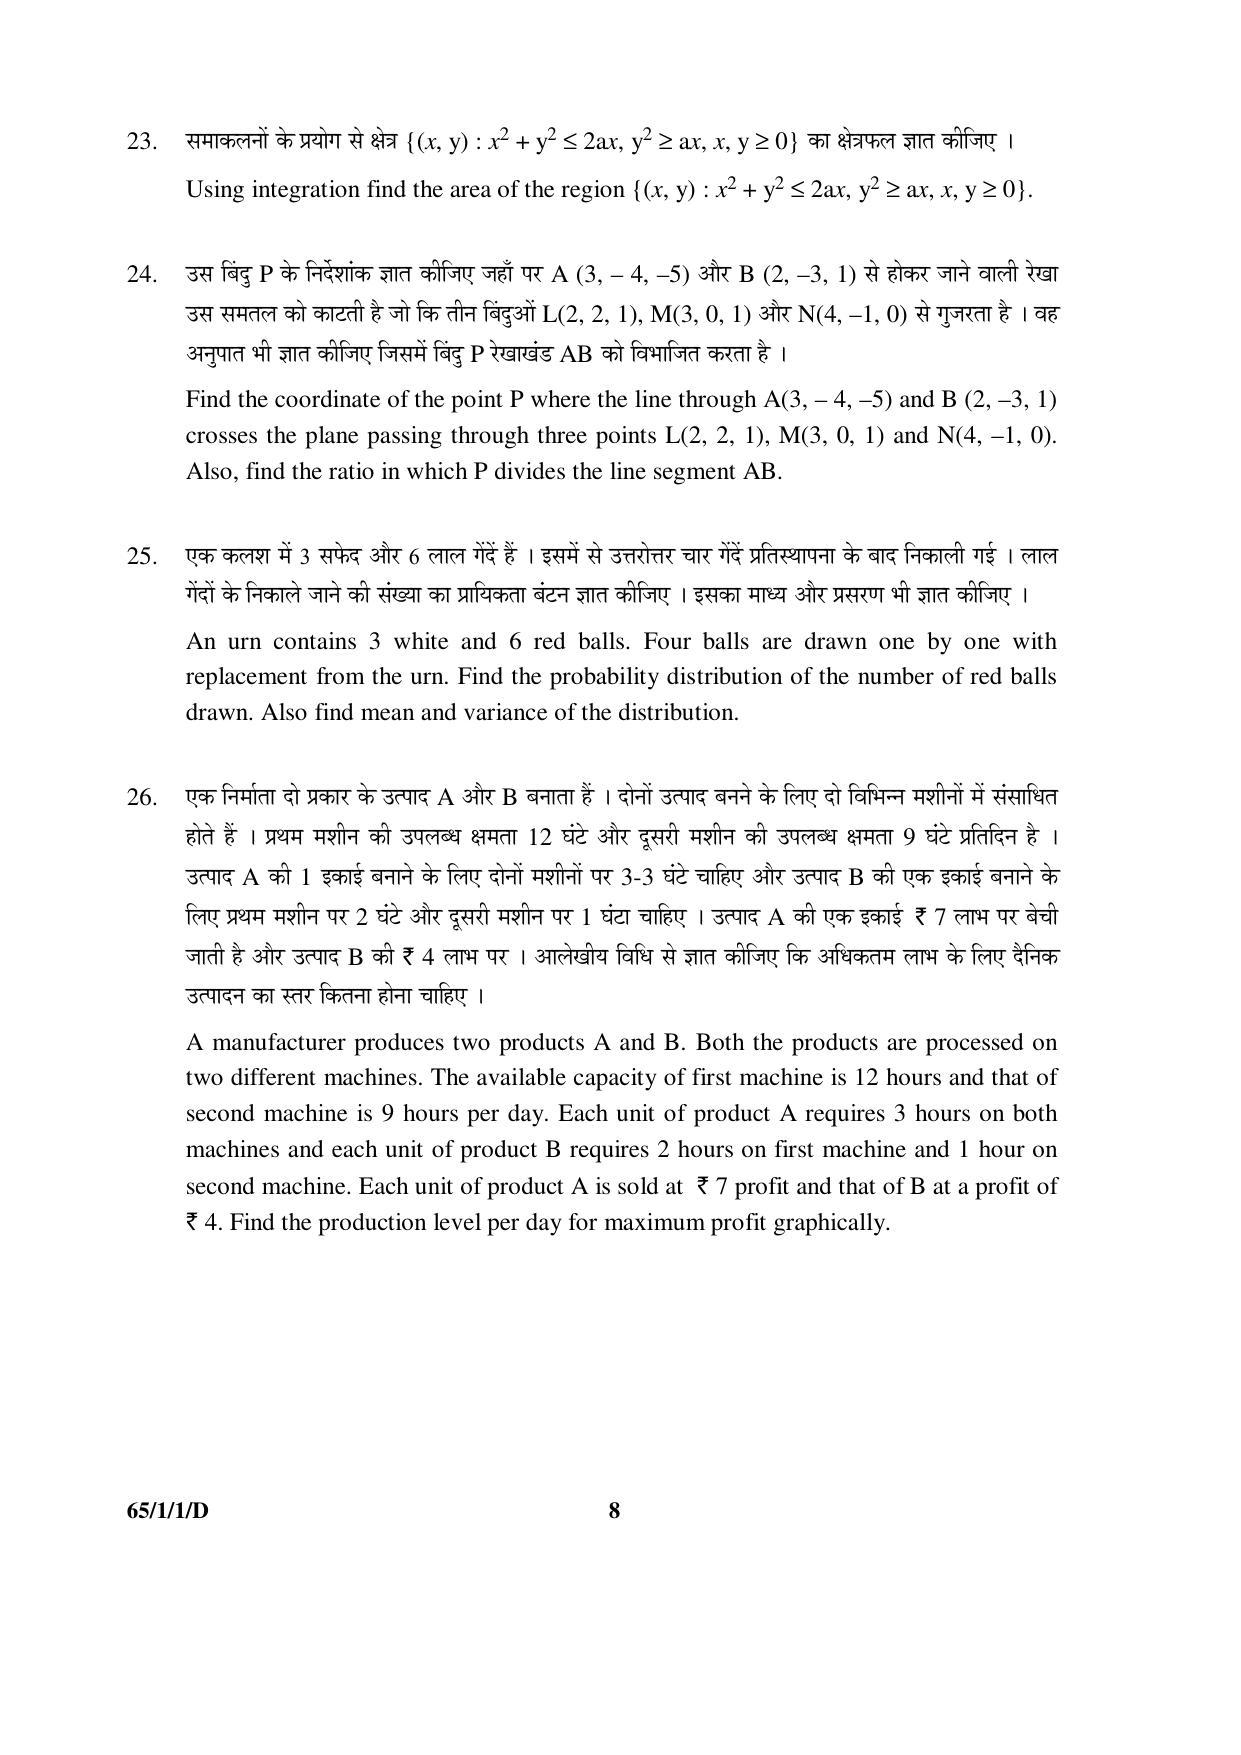 CBSE Class 12 65-1-1-D MATHEMATICS 2016 Question Paper - Page 8